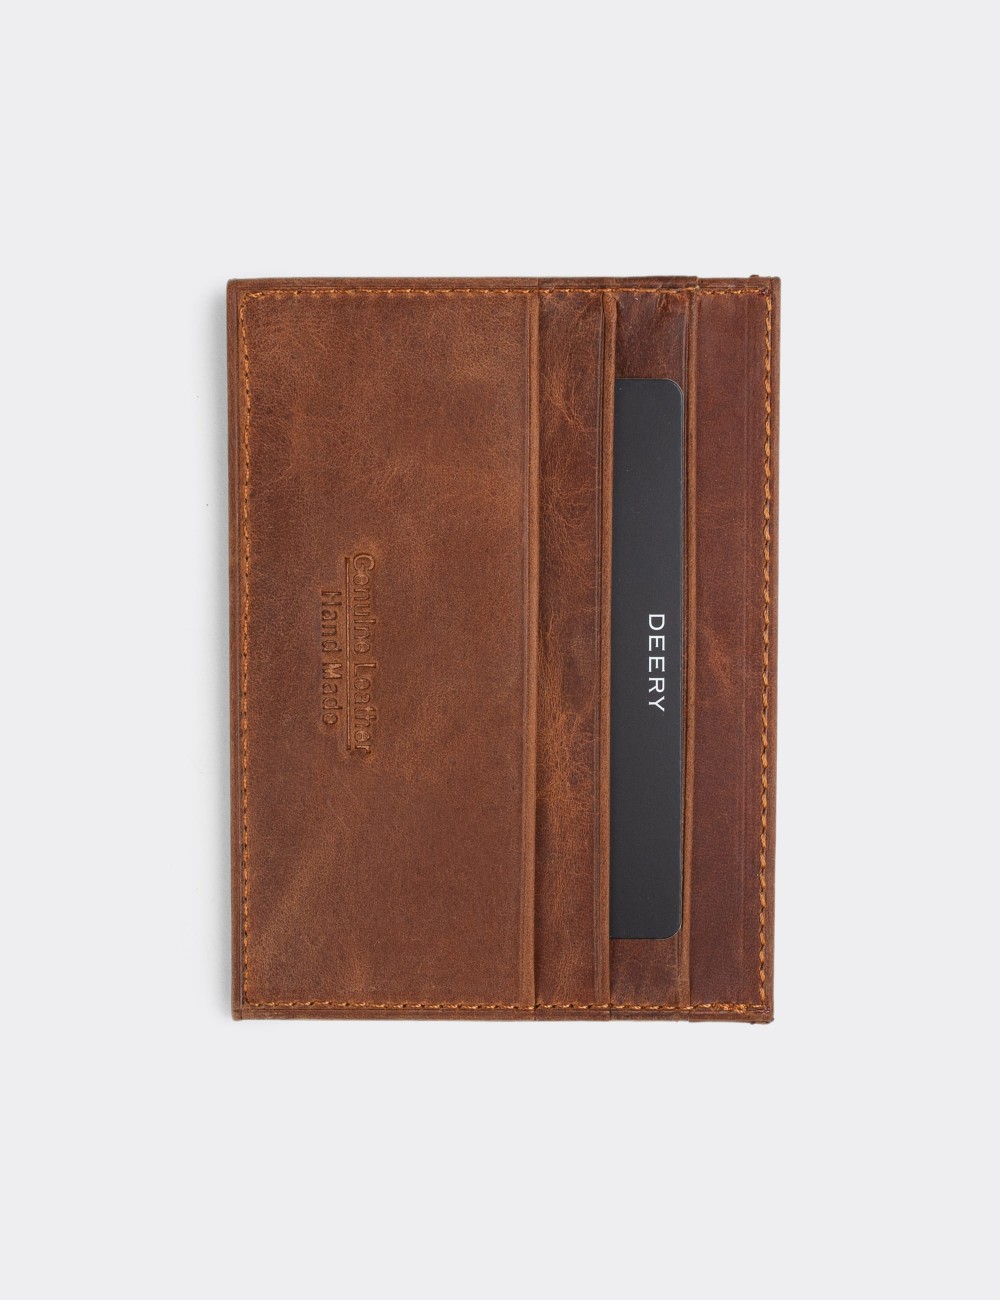  Leather Tan Men's Wallet - 0588CMTBAZ01